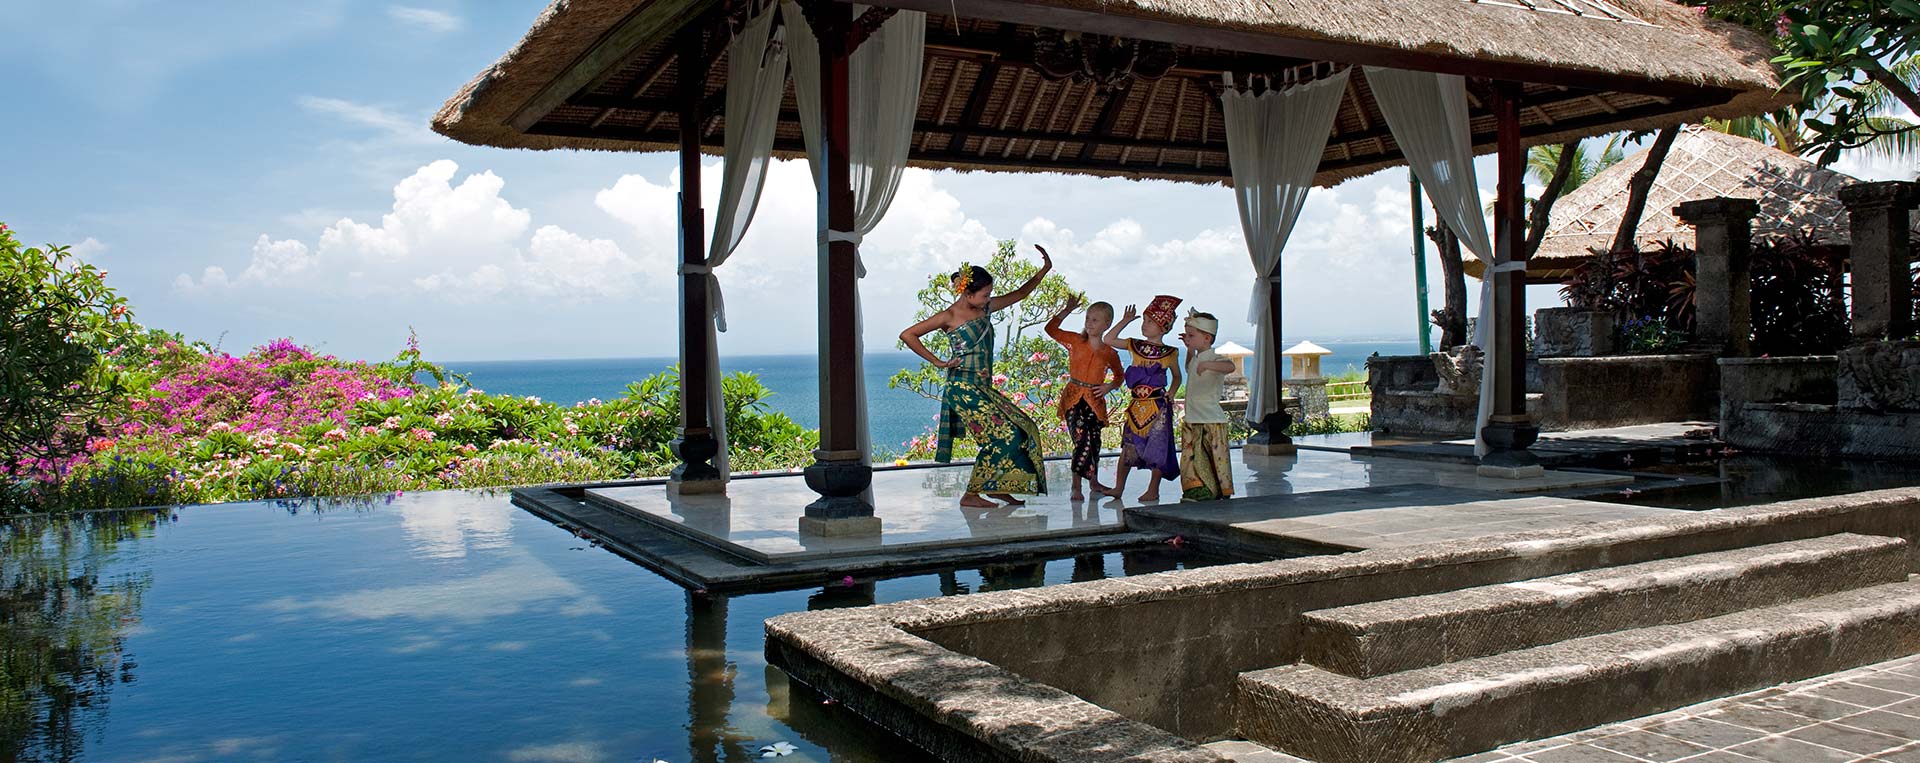 World's most beautiful destinations: Ayana Resort & Spa, Bali.